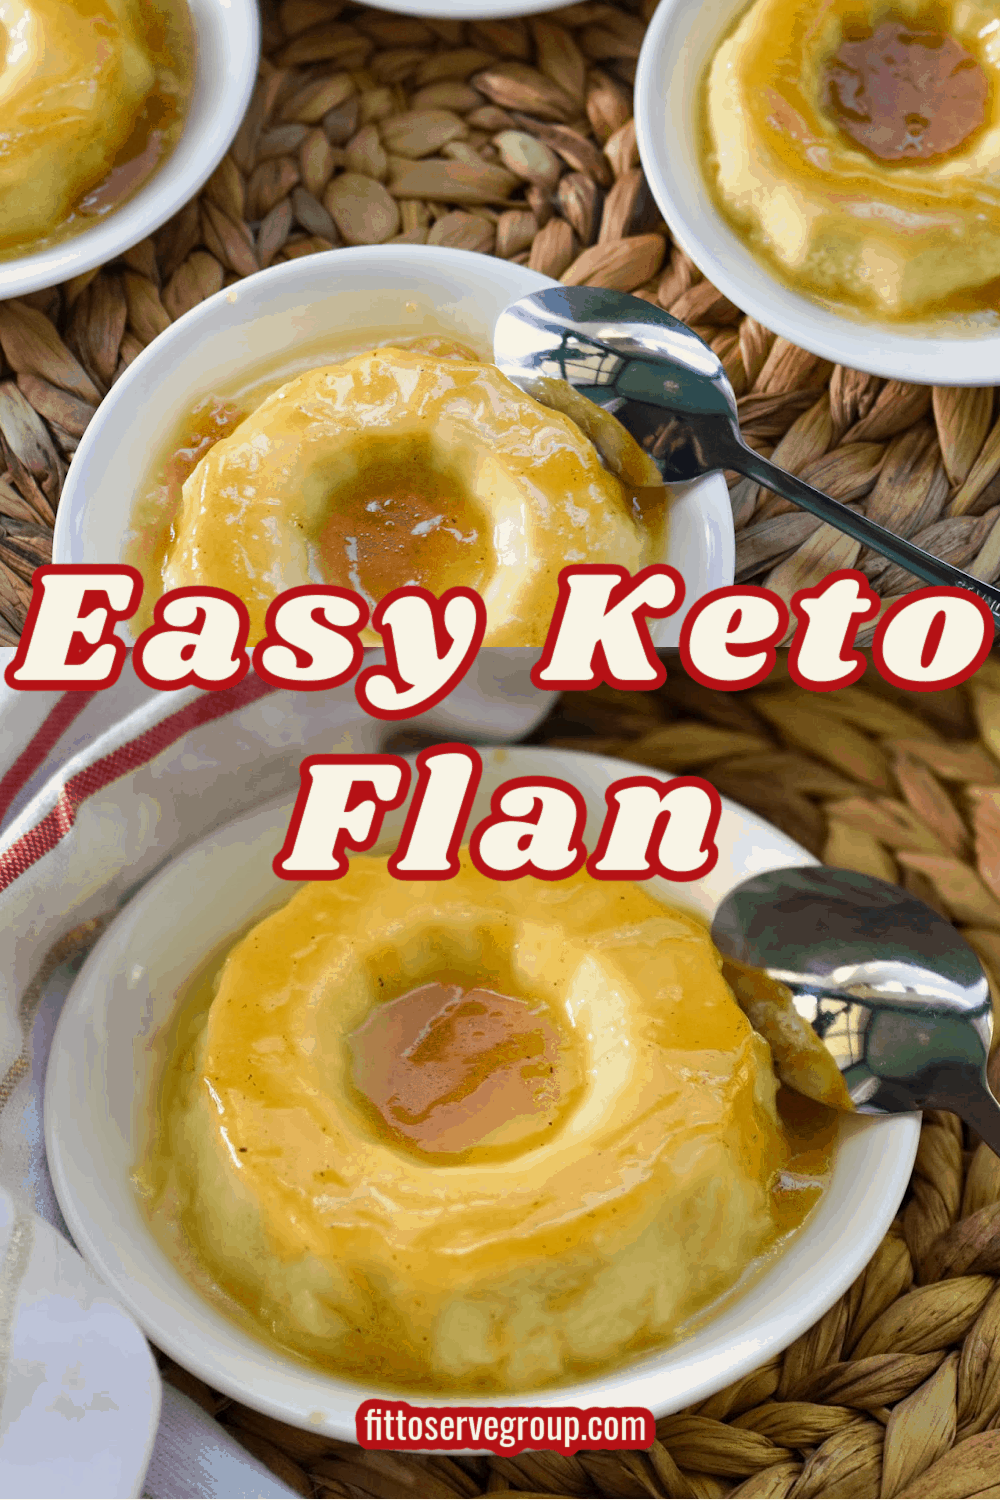 Easy Keto Cuban flan